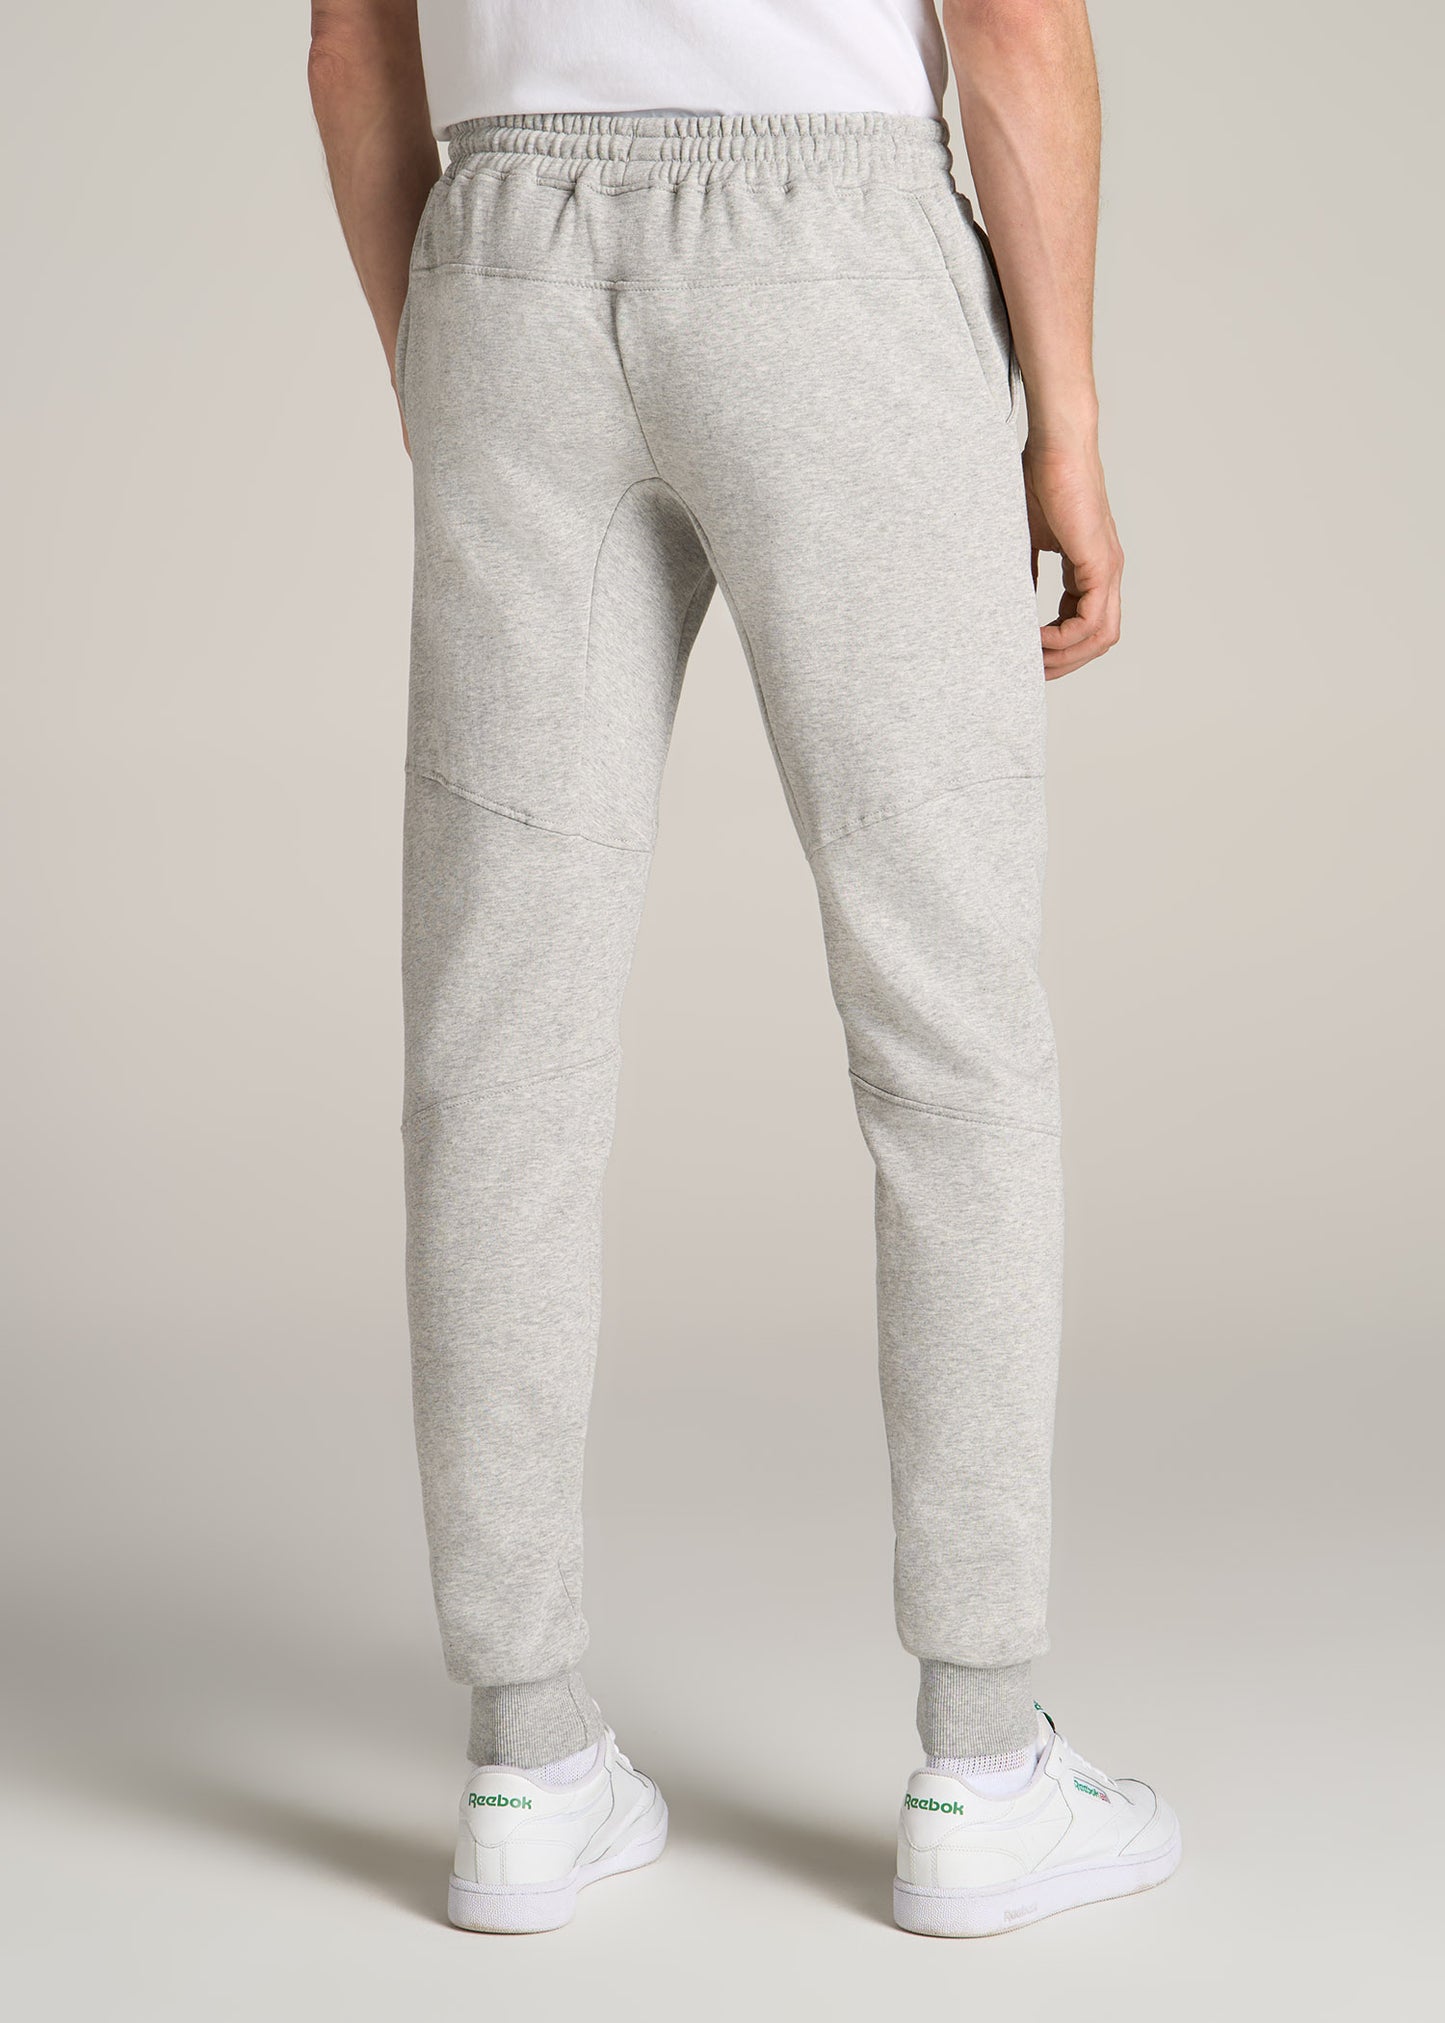 Men's sweatpants - light grey P949